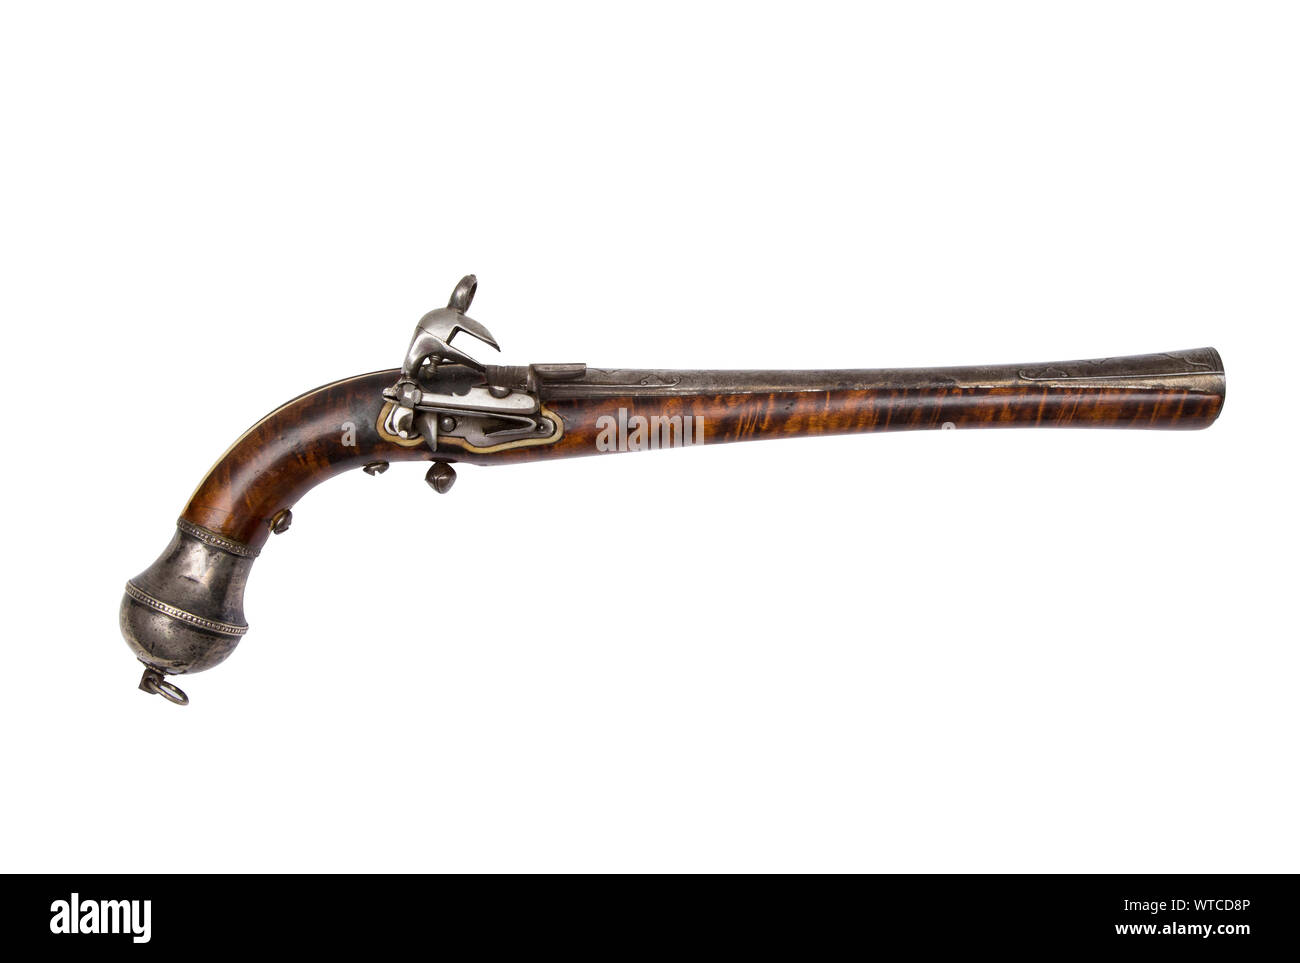 Georgian (Russian Empire) flintlock blunderbuss pistol. 19th century. Damascus steal barrel. Solid silver mounts. Stock Photo